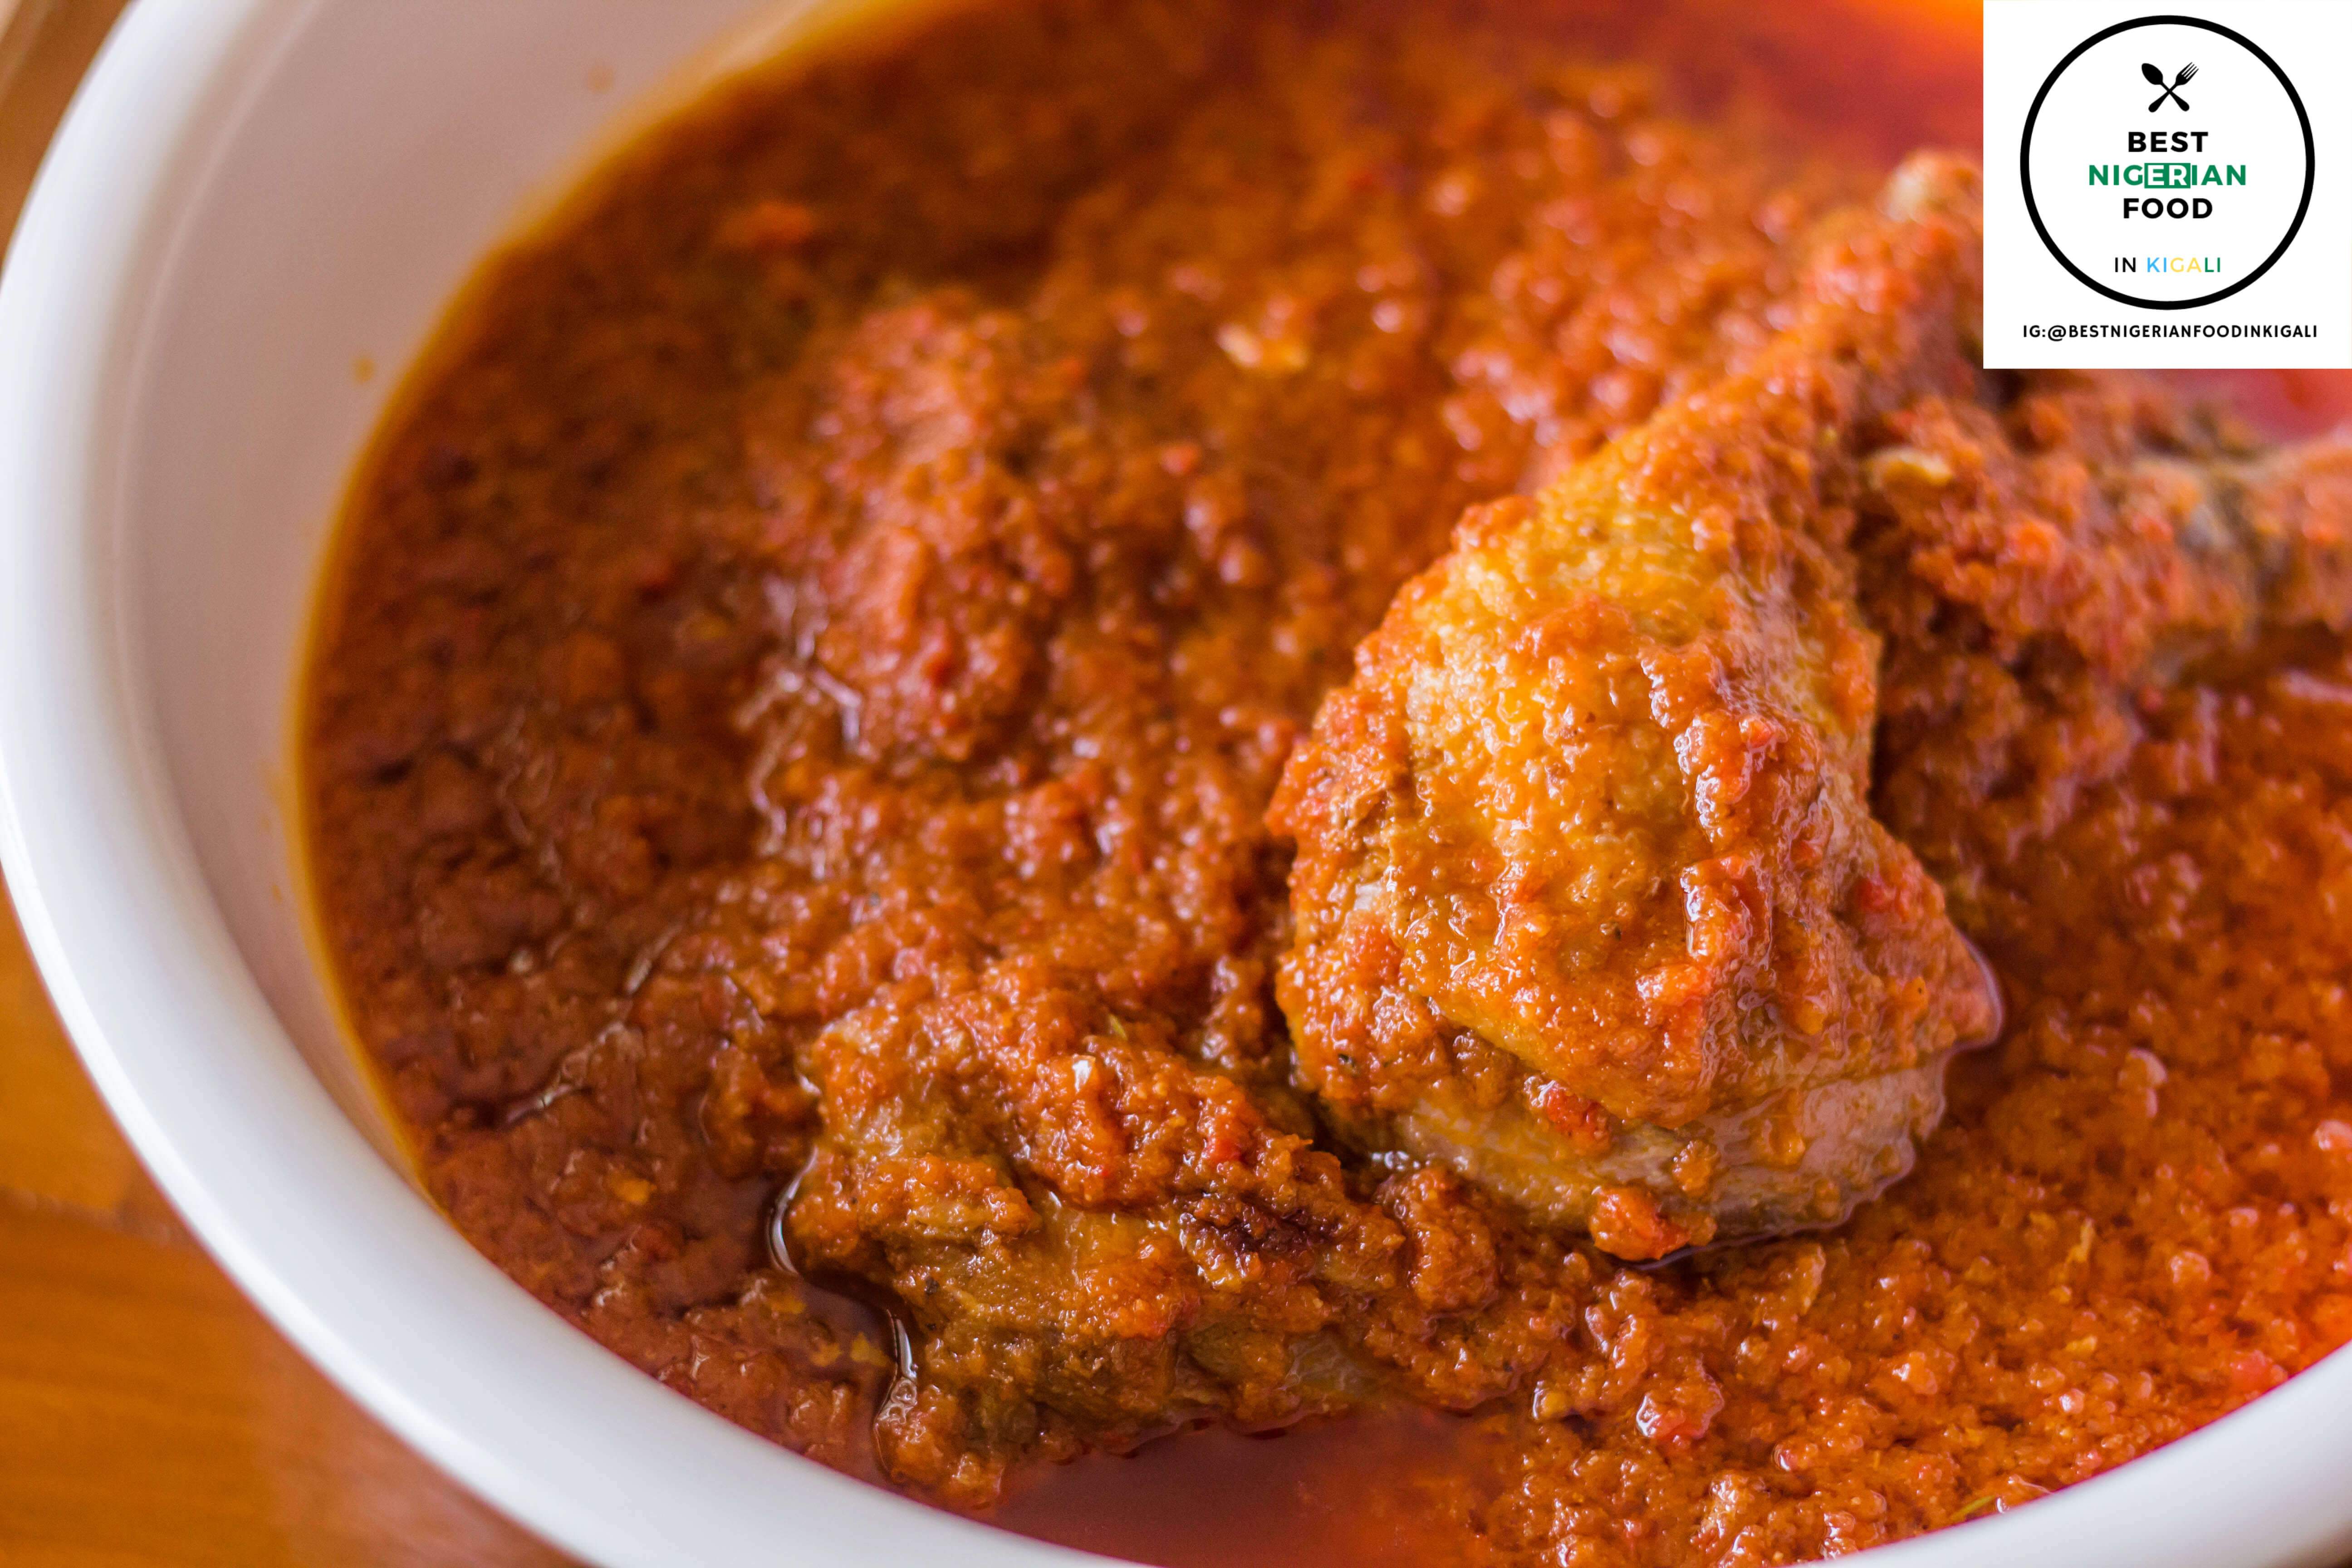 Vegan Food in Litres (2L) Tomato Stew - The Best Nigerian Food in Kigali